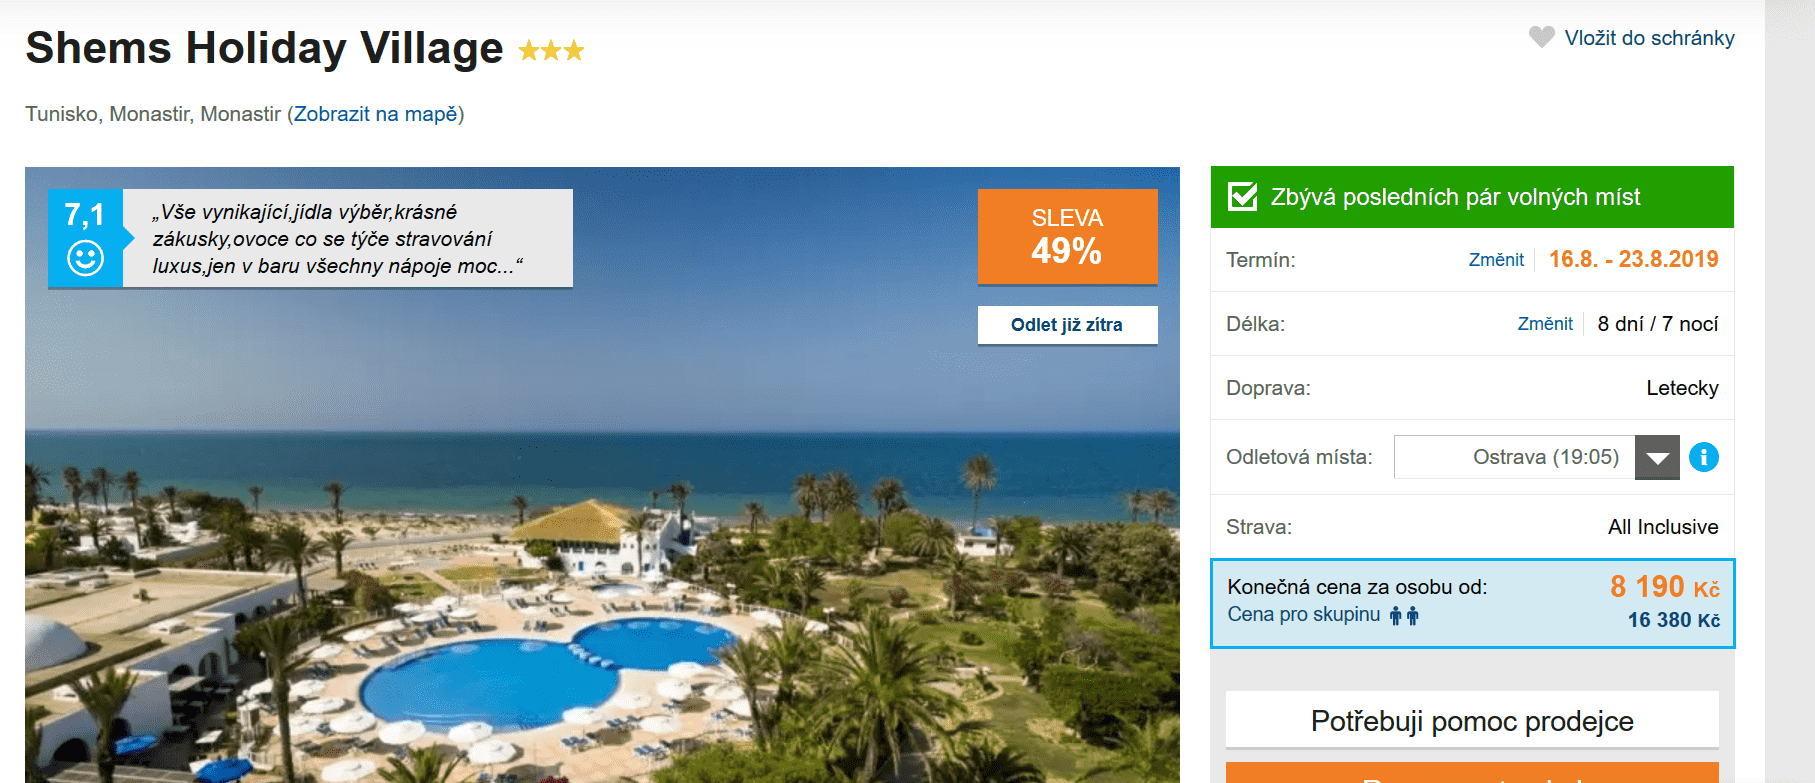 Zájezd Tunisko (hotel Shems Holiday Village)